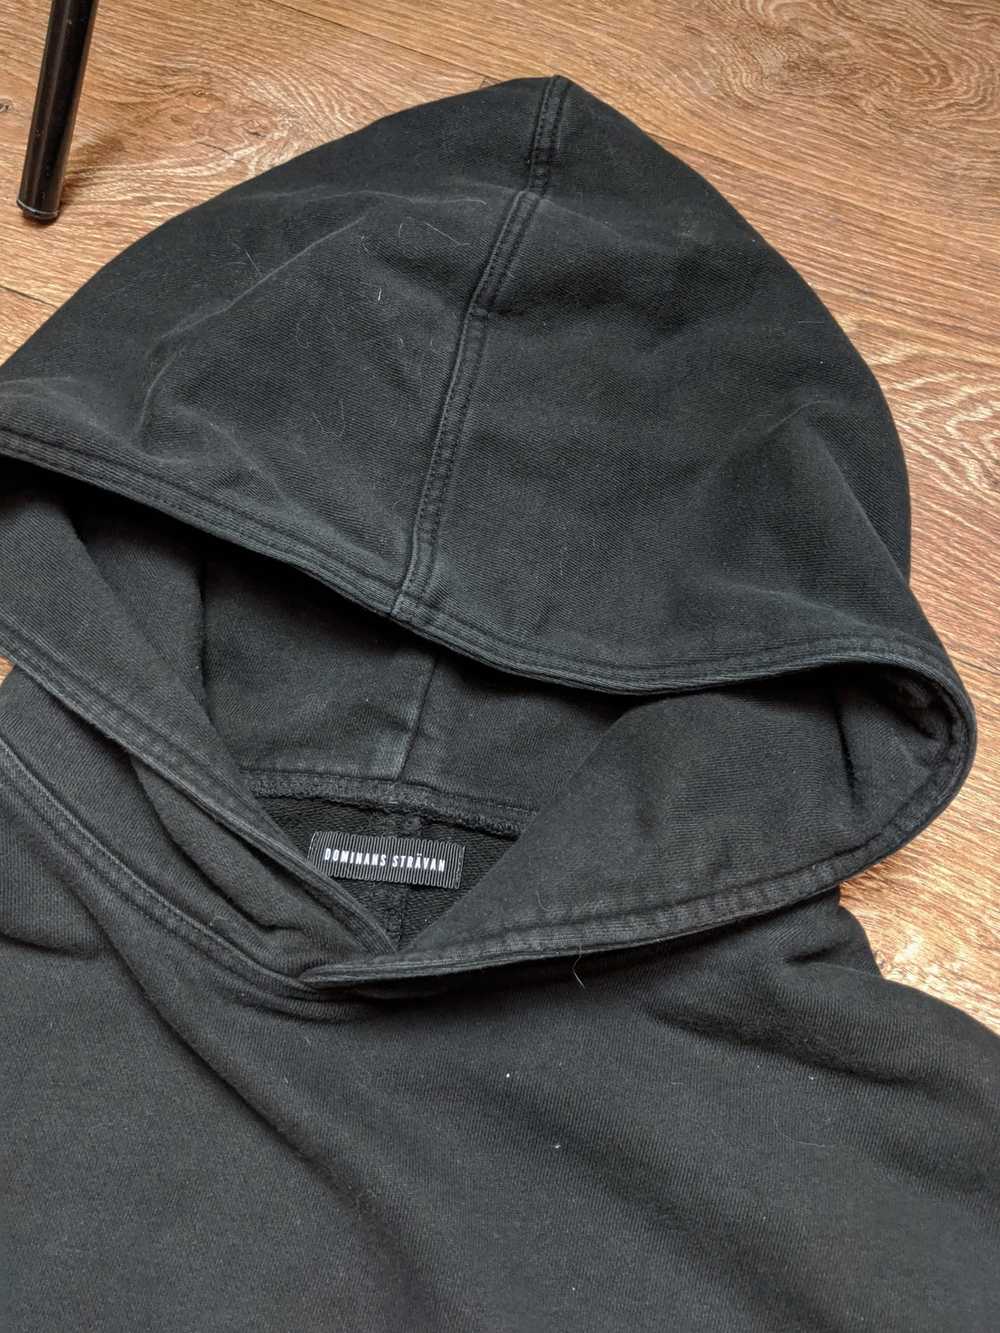 Dominans Stravan Black Den hoodie rare limited ed… - image 2